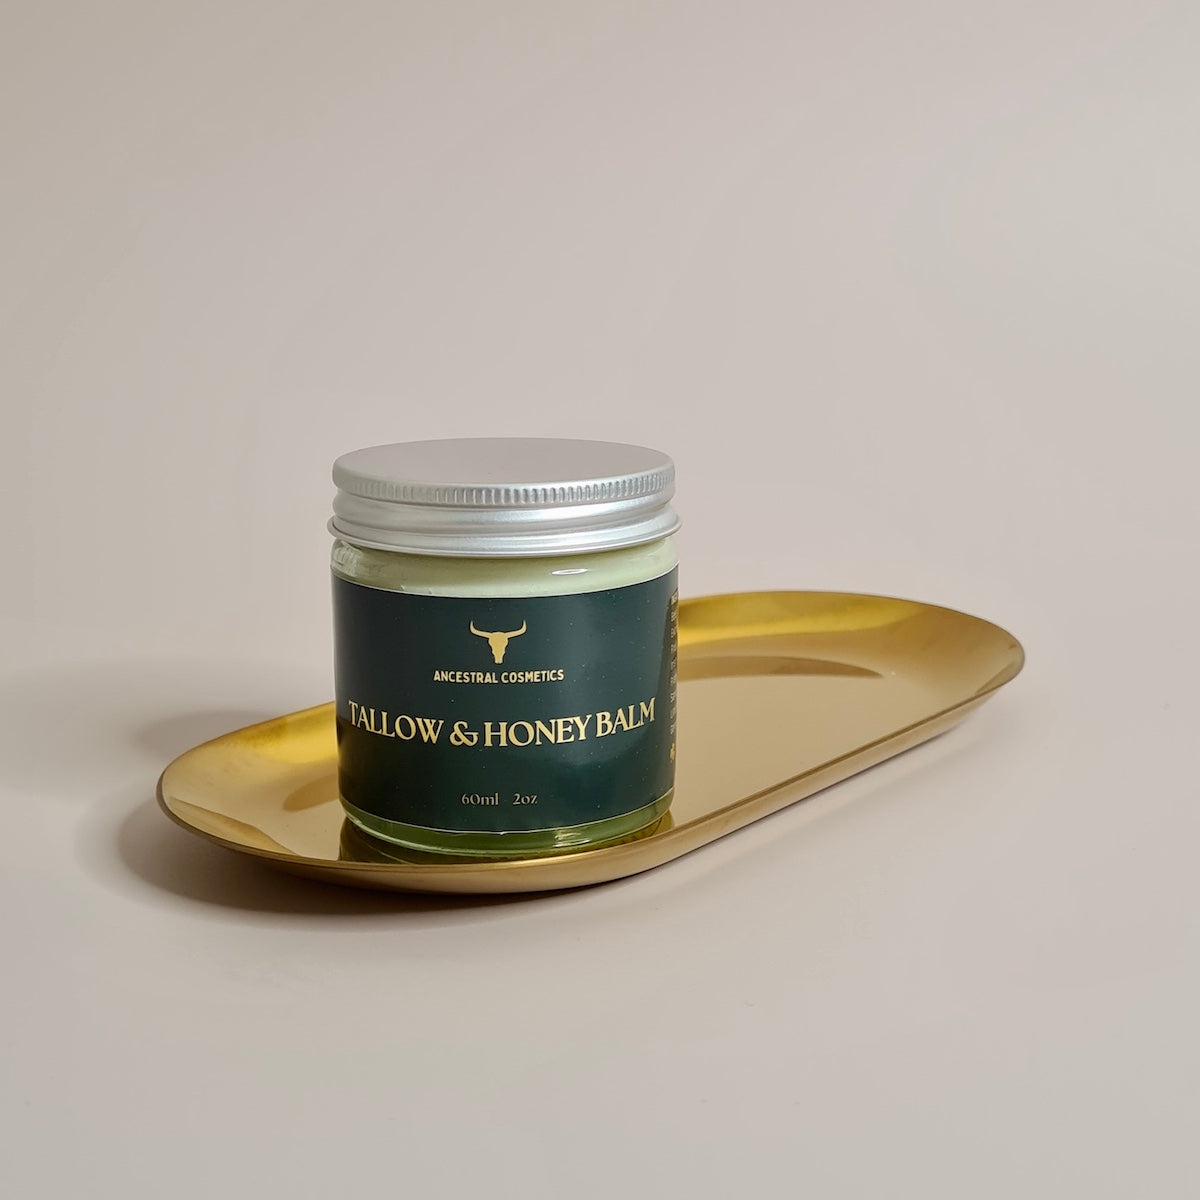 Original Tallow & Honey Balm – Ancestral Cosmetics